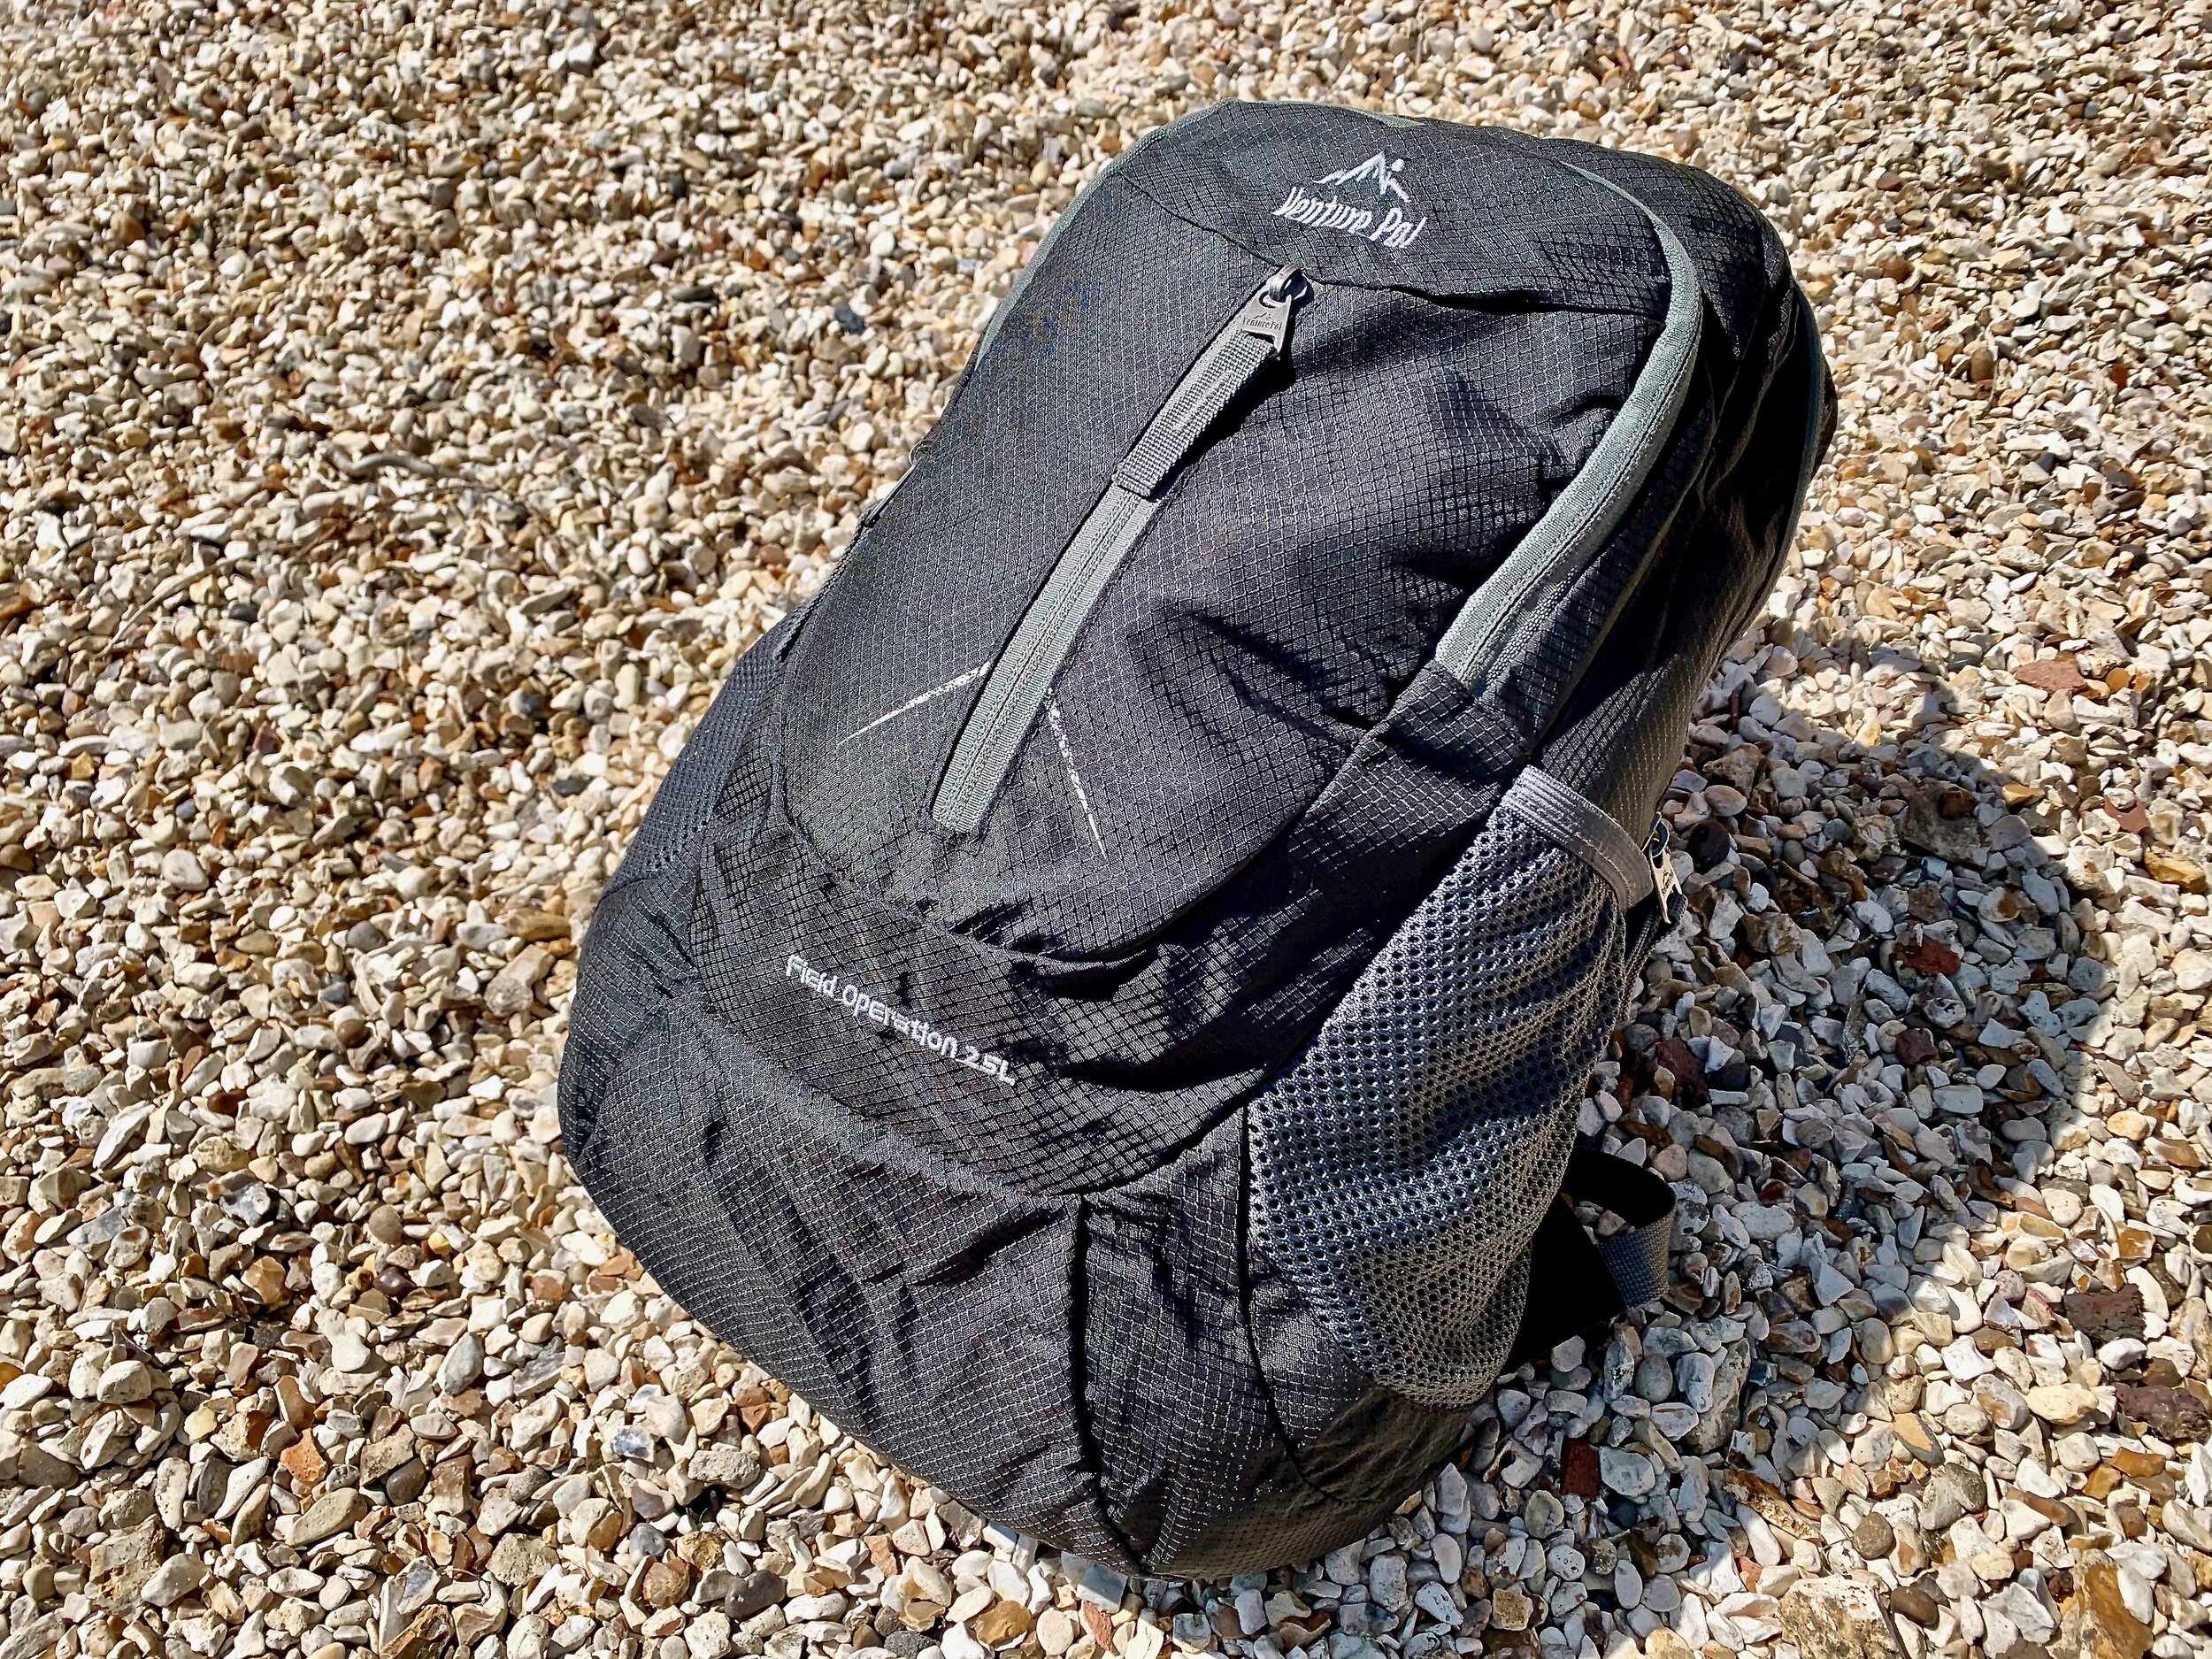 Venture Pal Backpack